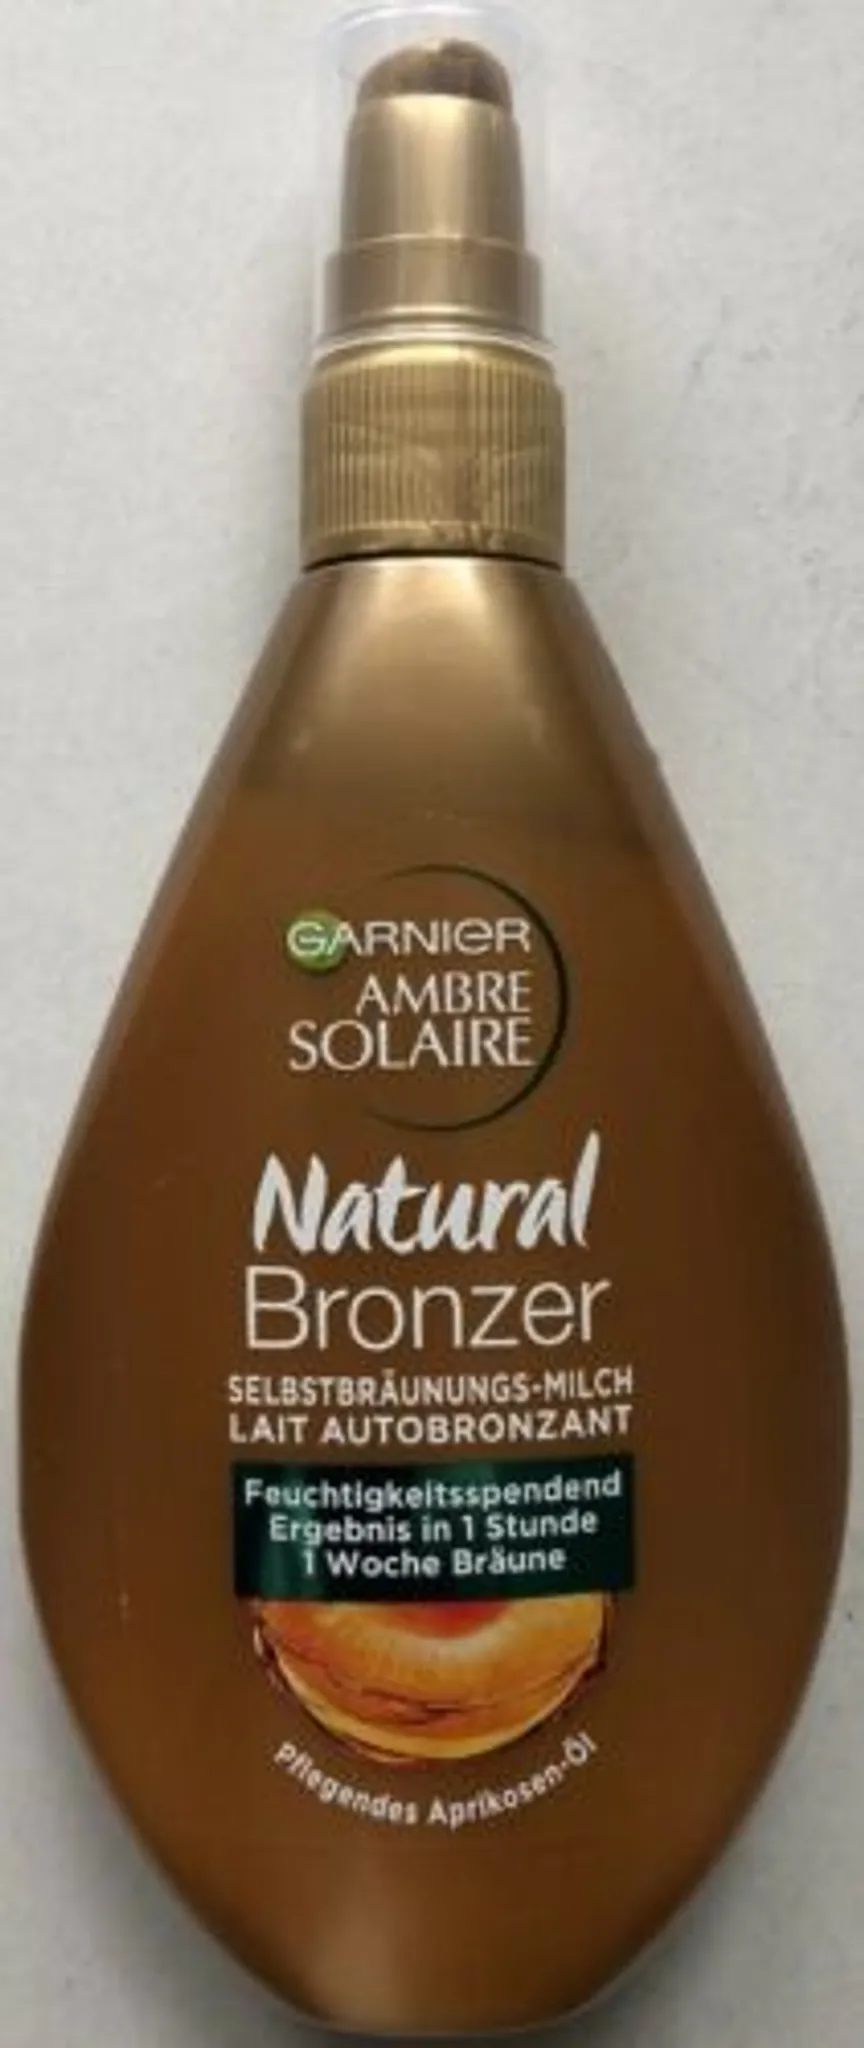 Garnier Ambre Solaire Natural Bronzer